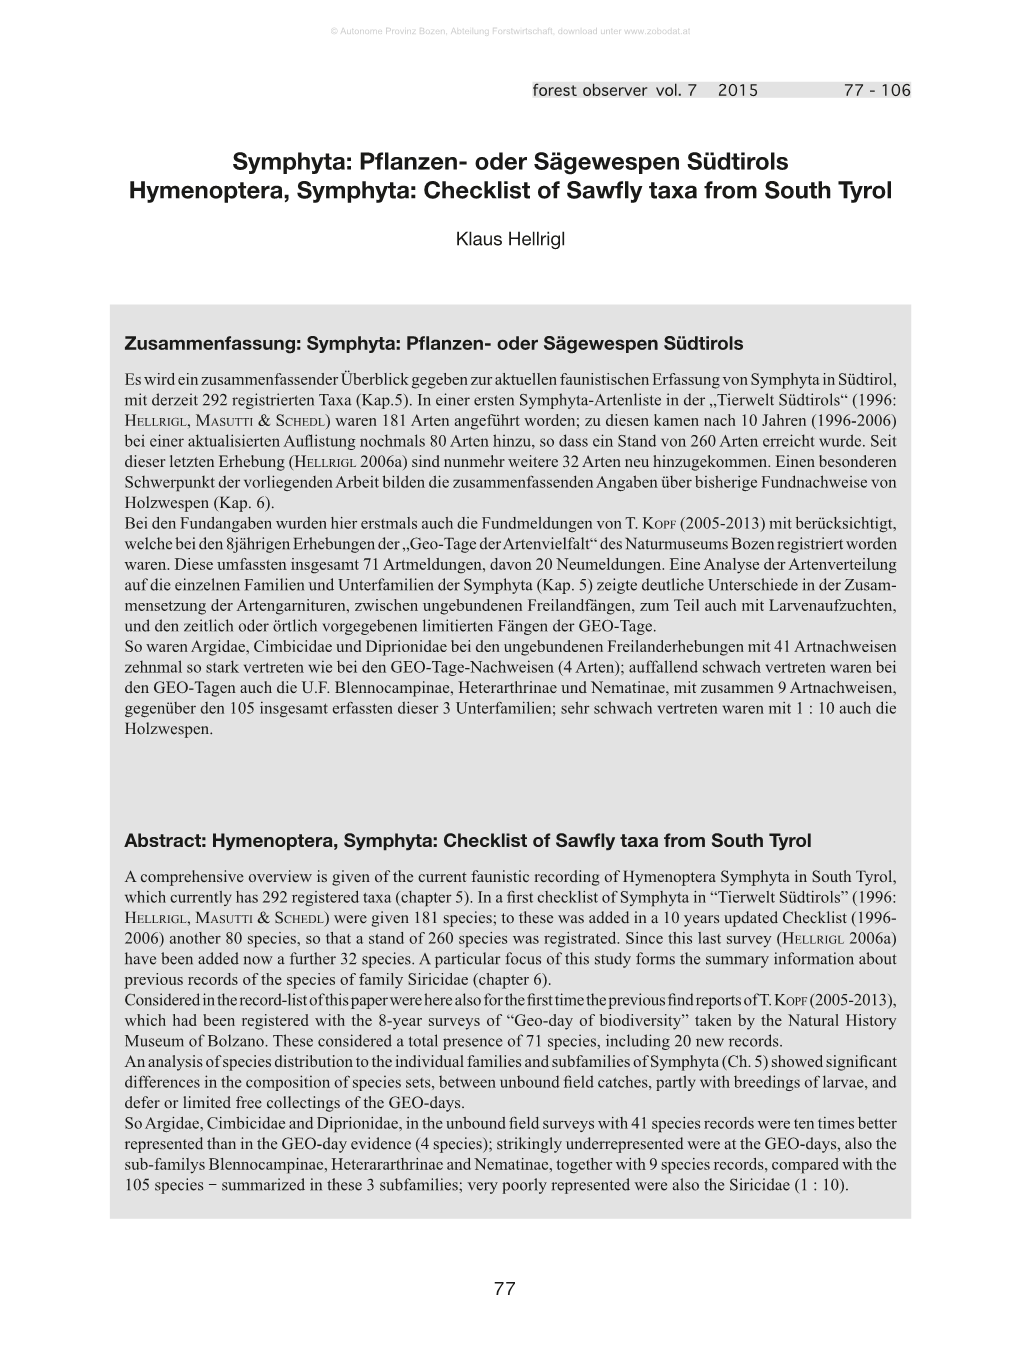 Pflanzen- Oder Sägewespen Südtirols Hymenoptera, Symphyta: Checklist of Sawfly Taxa from South Tyrol